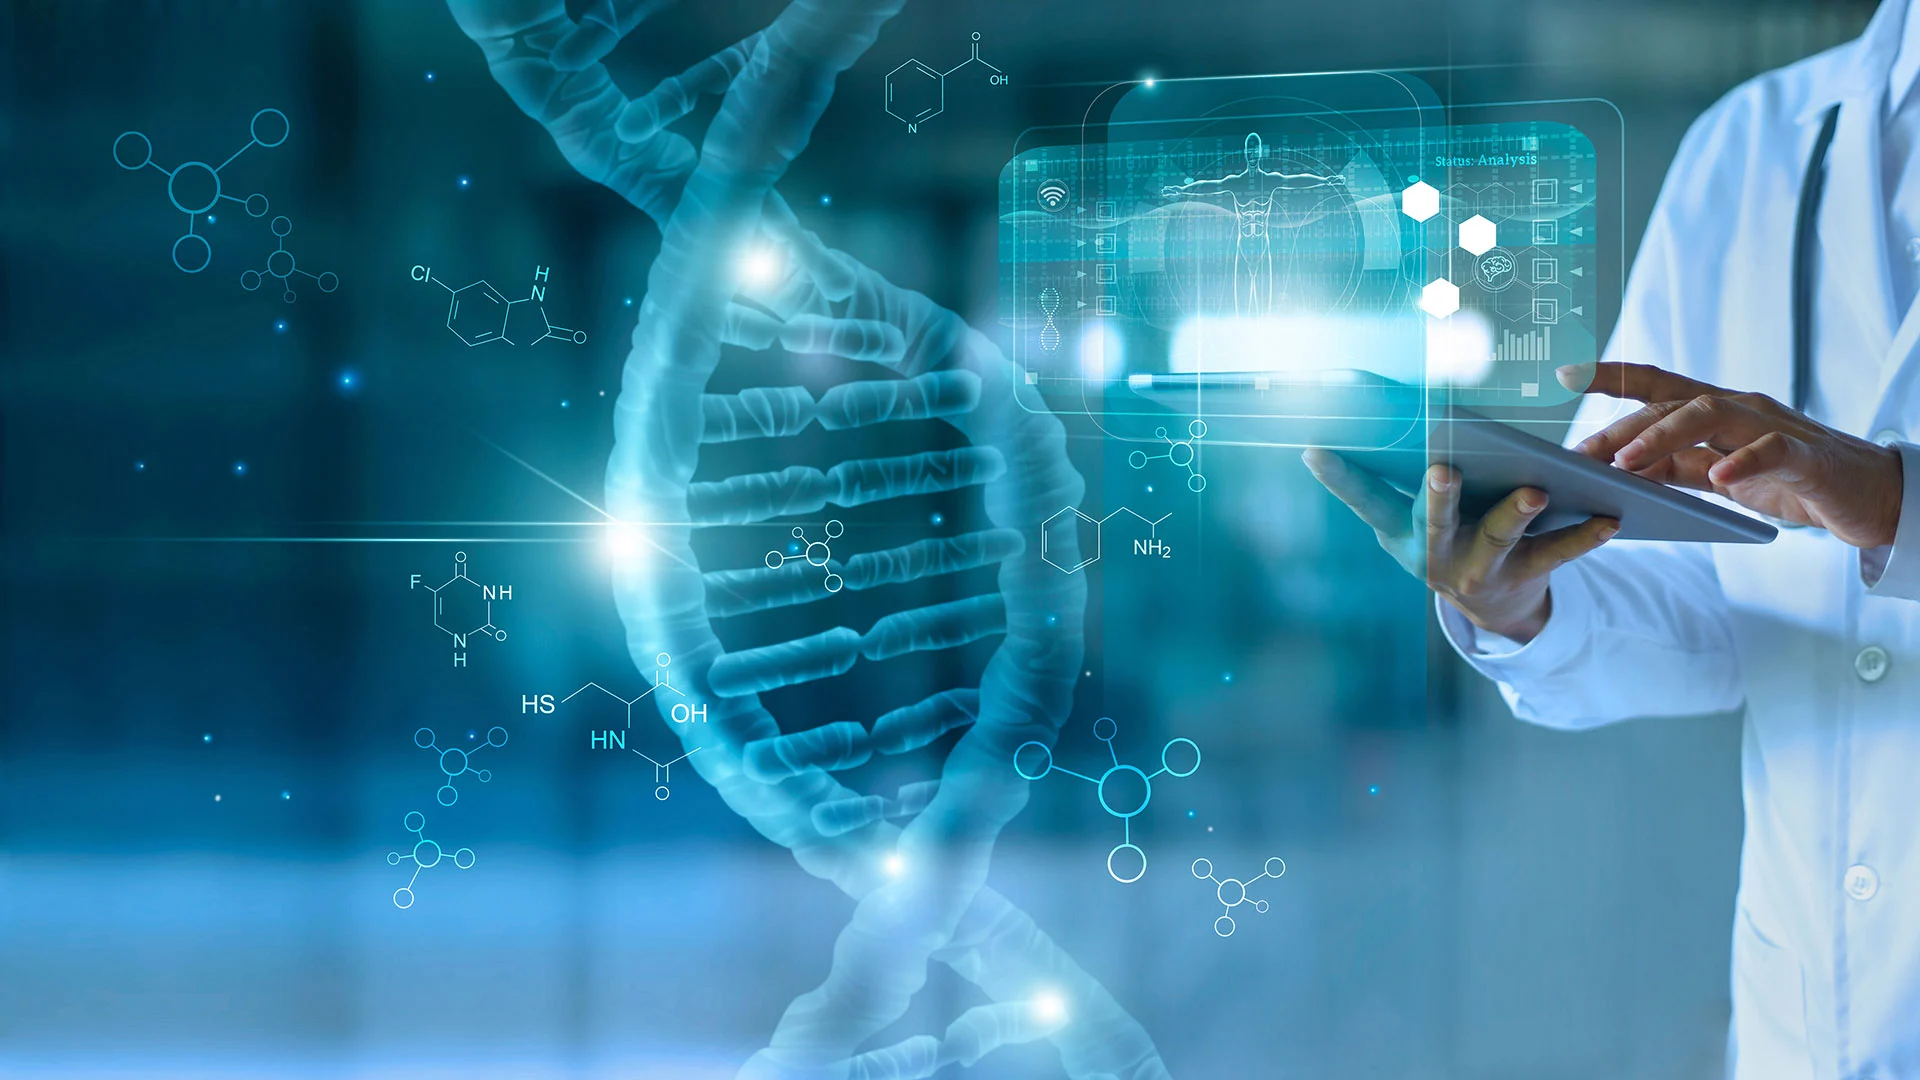 Geniale Technologie, riesiges Potenzial: Diese Biotechfirma könnte alles verändern (Foto: Shutterstock)